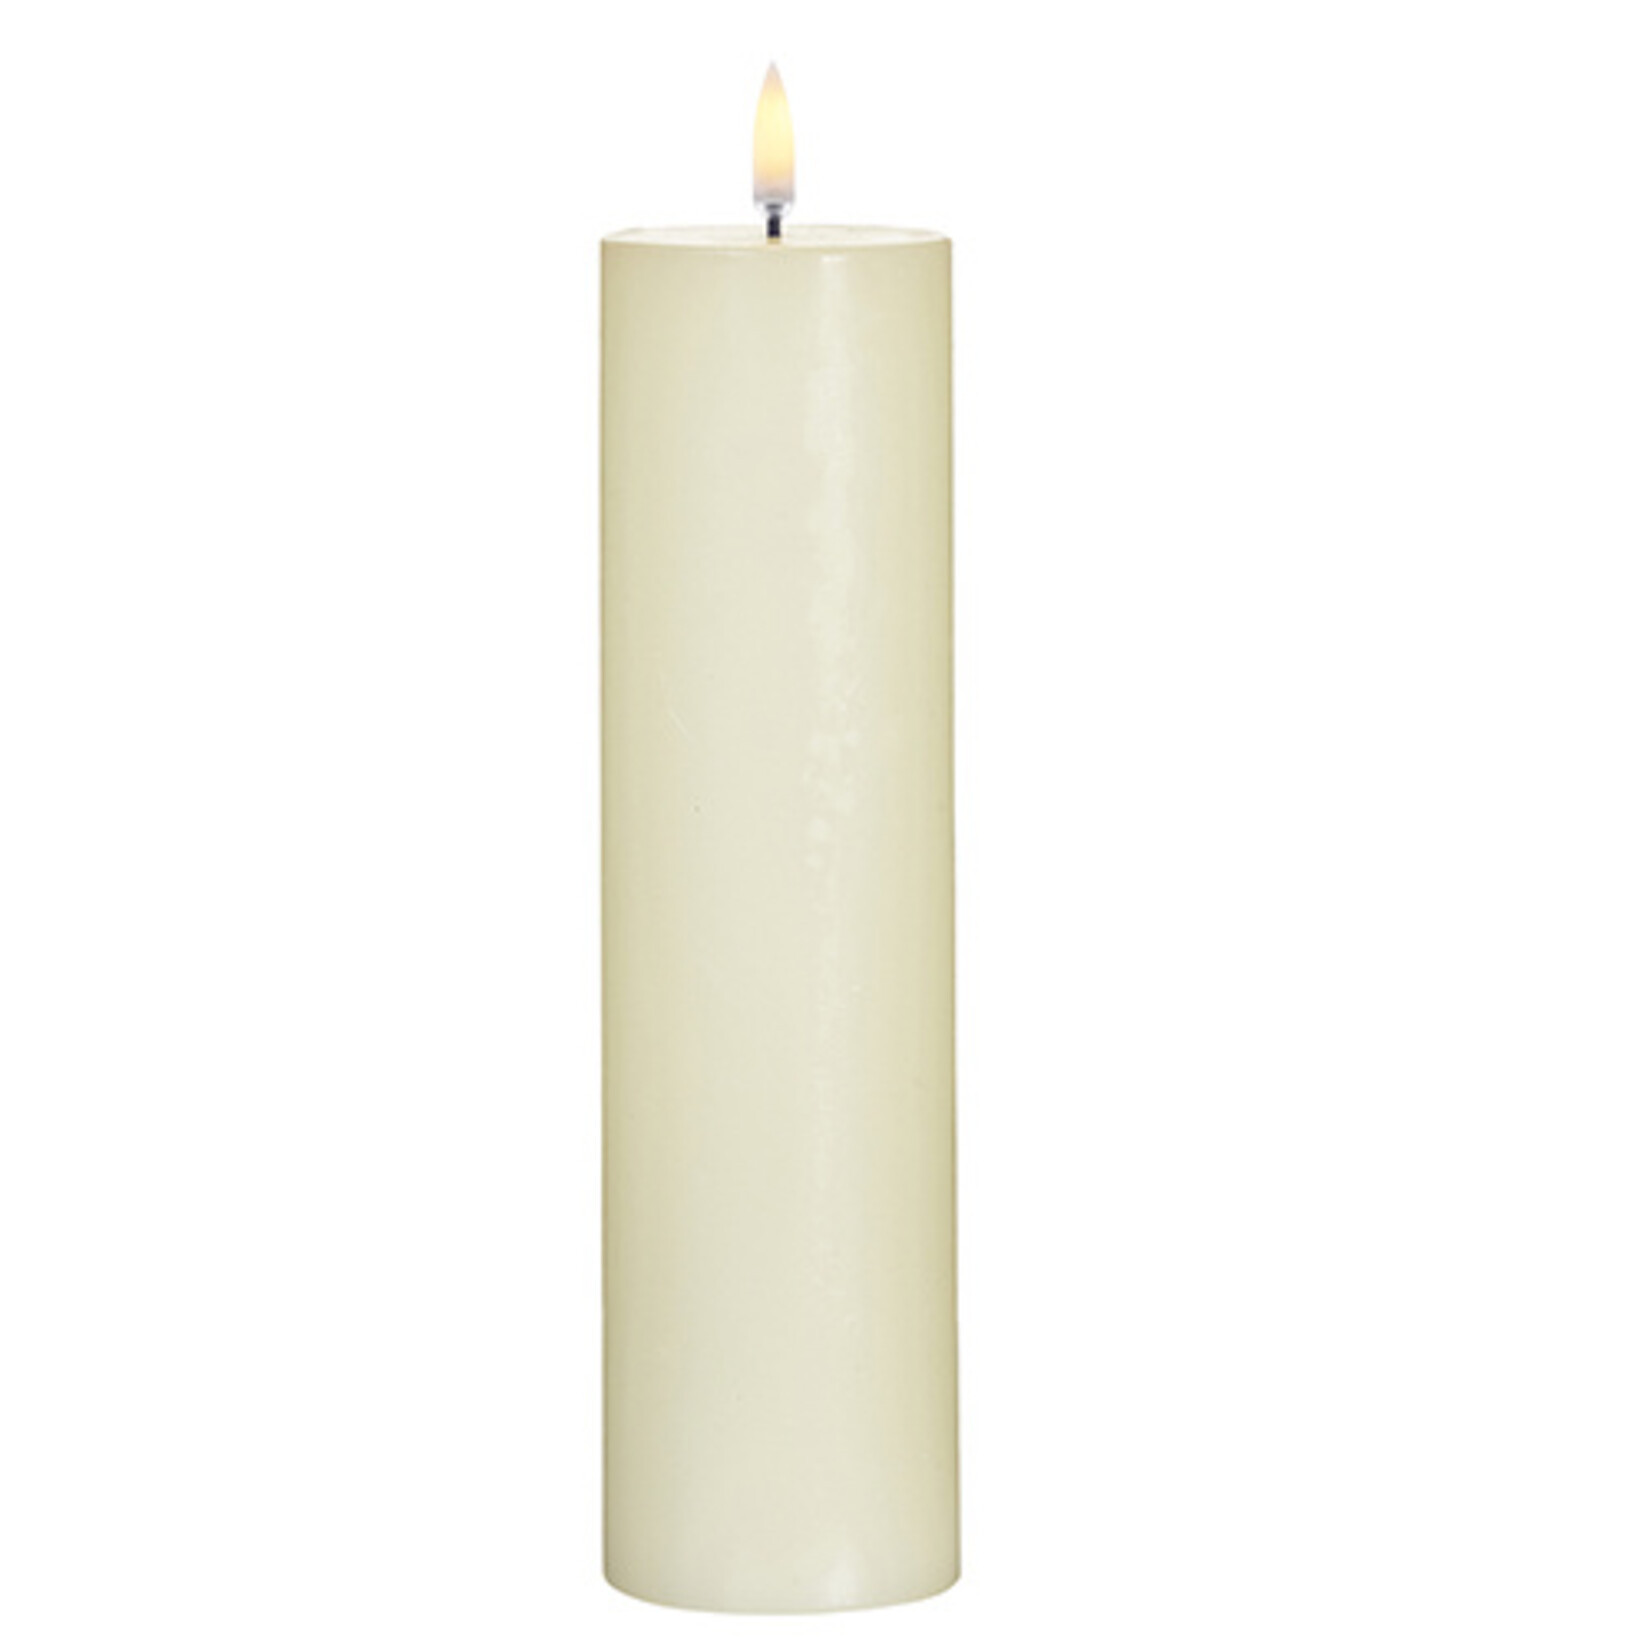 Ivory Pillar Candle 2.25x9.75"